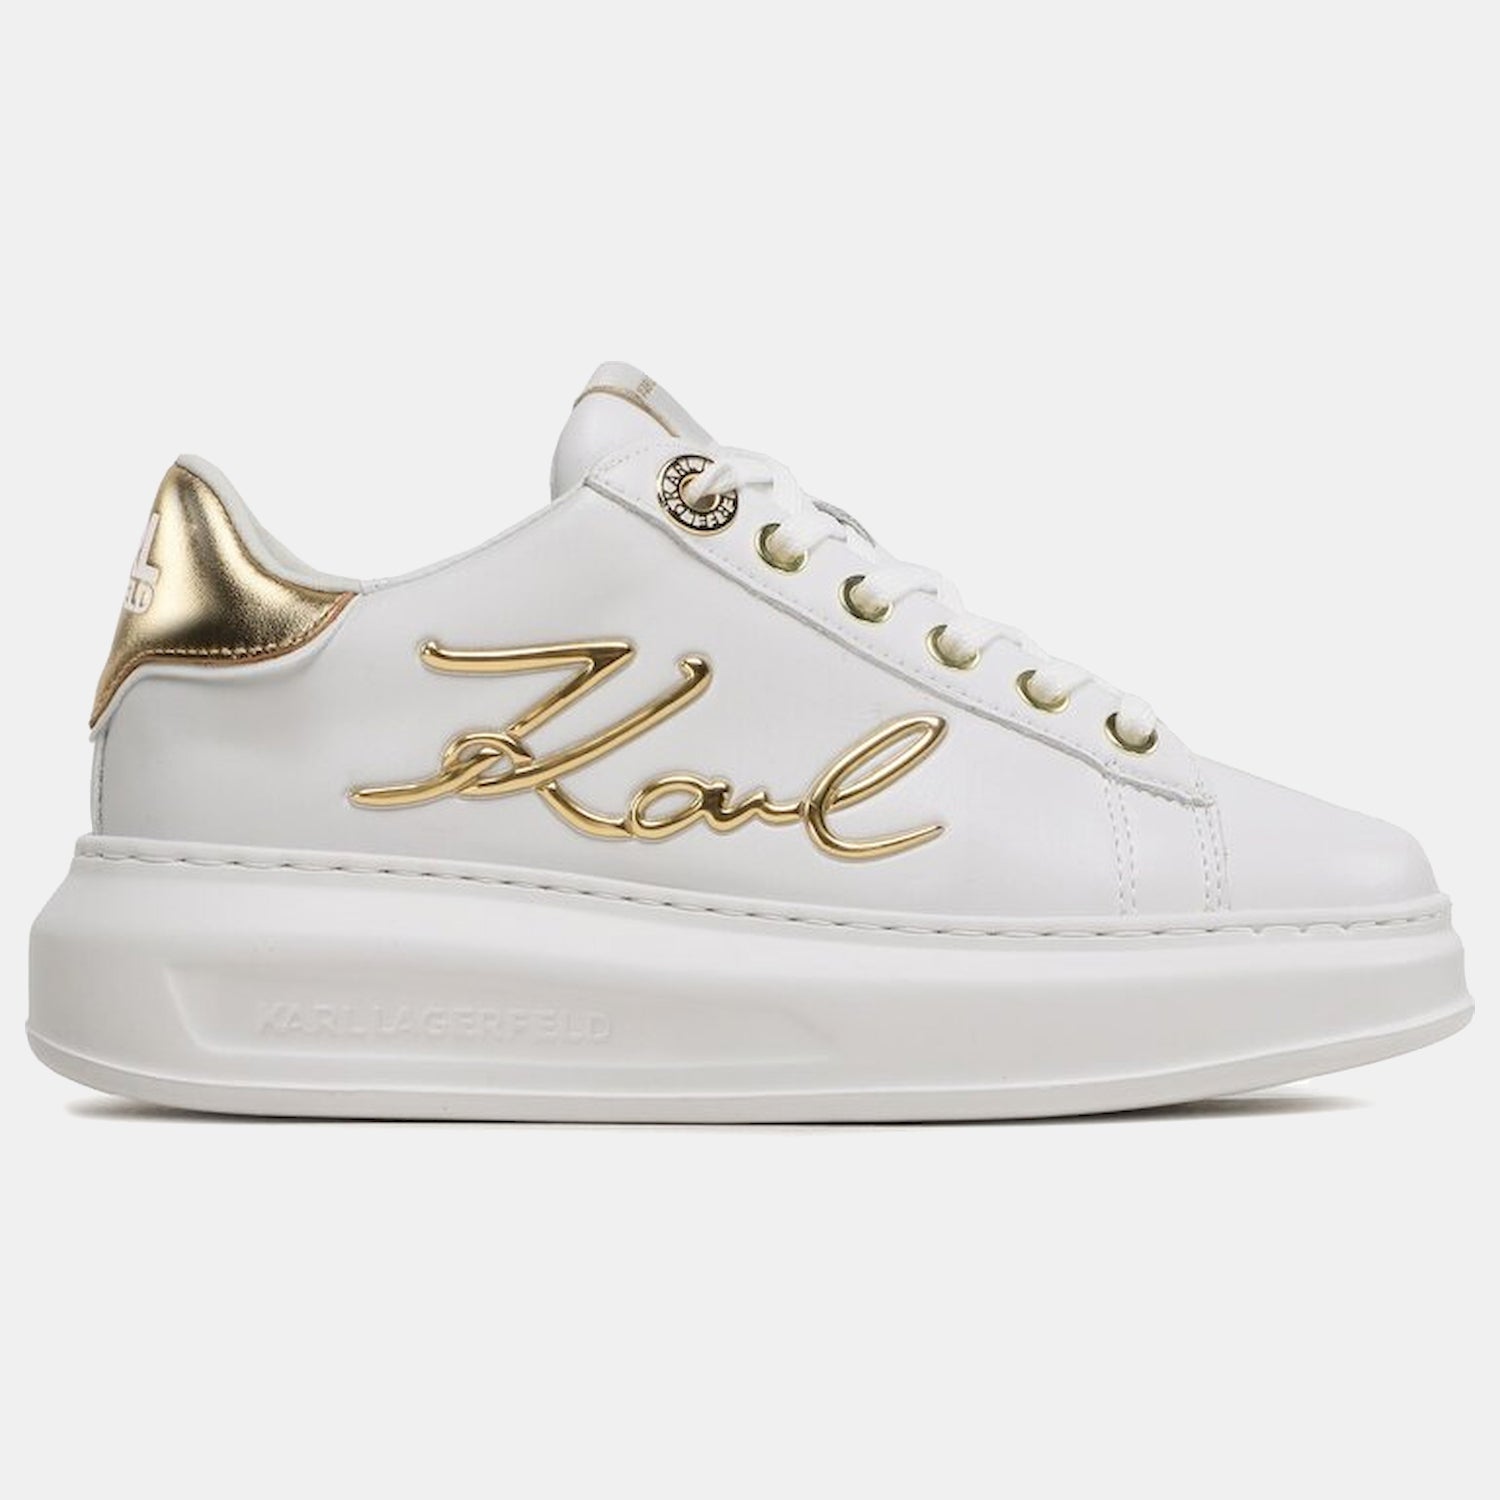 Karl Lagerfeld Sapatilhas Sneakers Shoes Kl62510a Whi Gold Branco Dourado_shot1